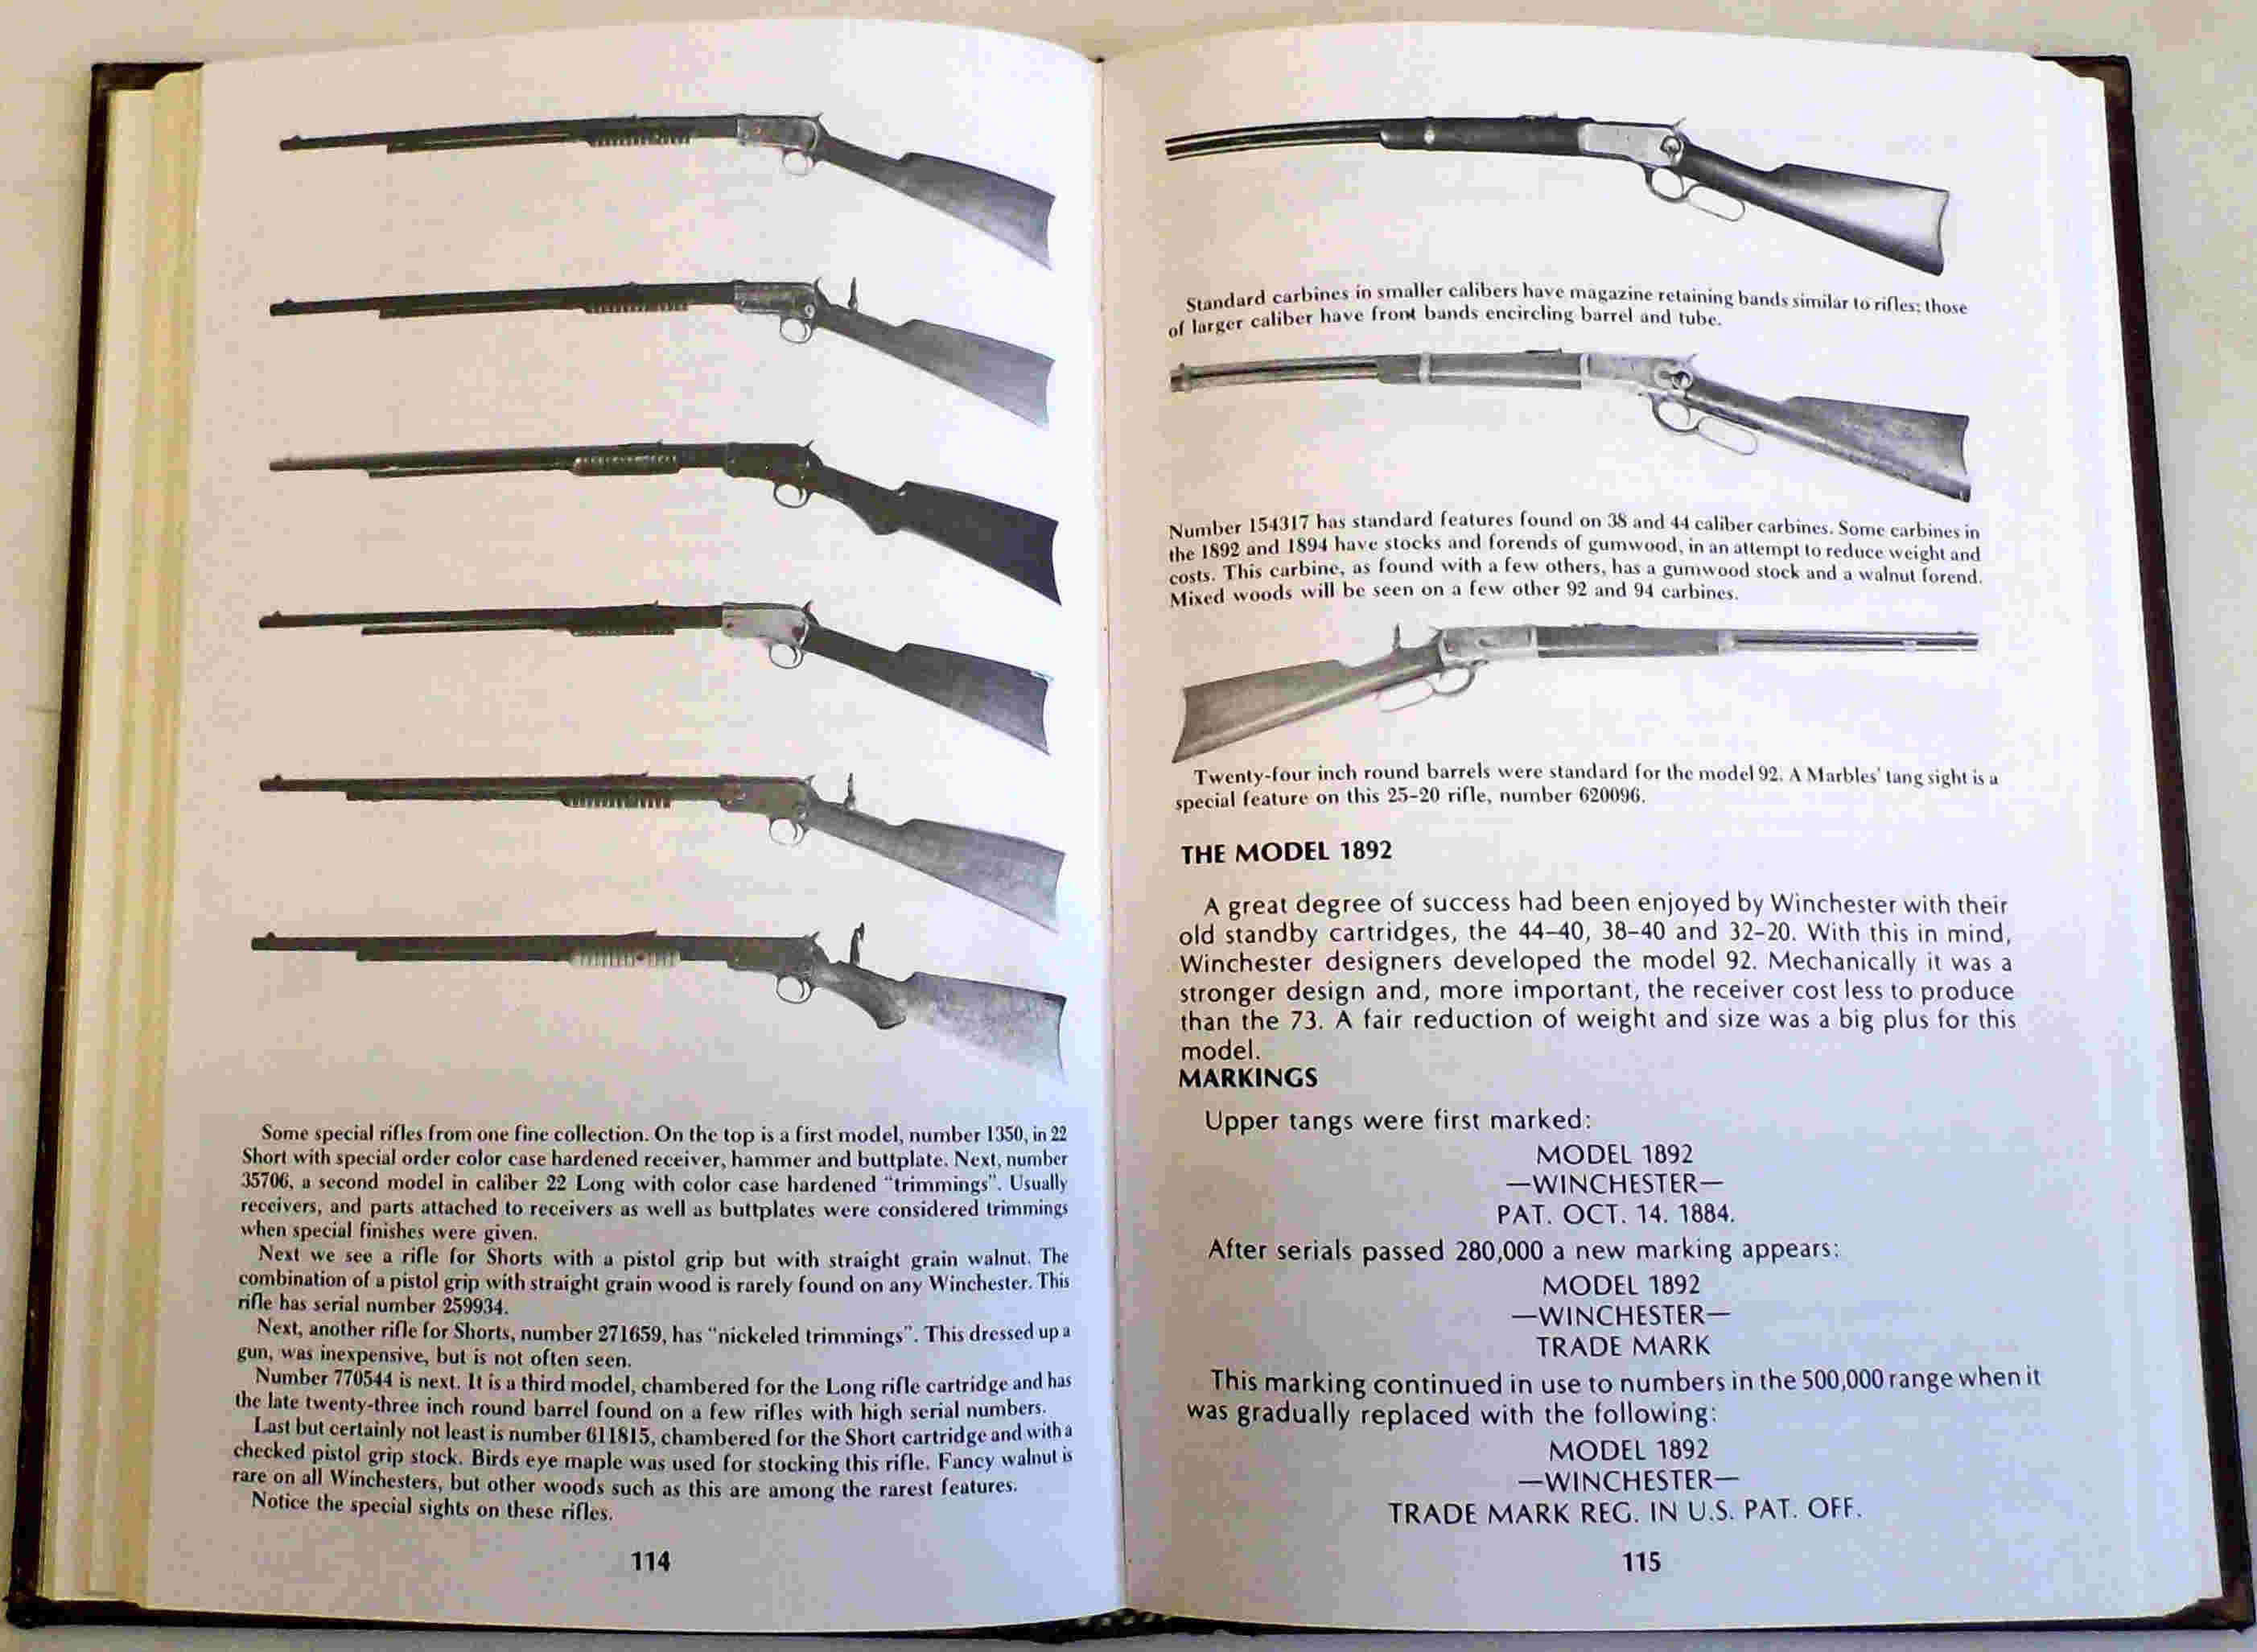 MADIS : choisir le Winchester Book ou le Winchester Handbook ? Hb11410